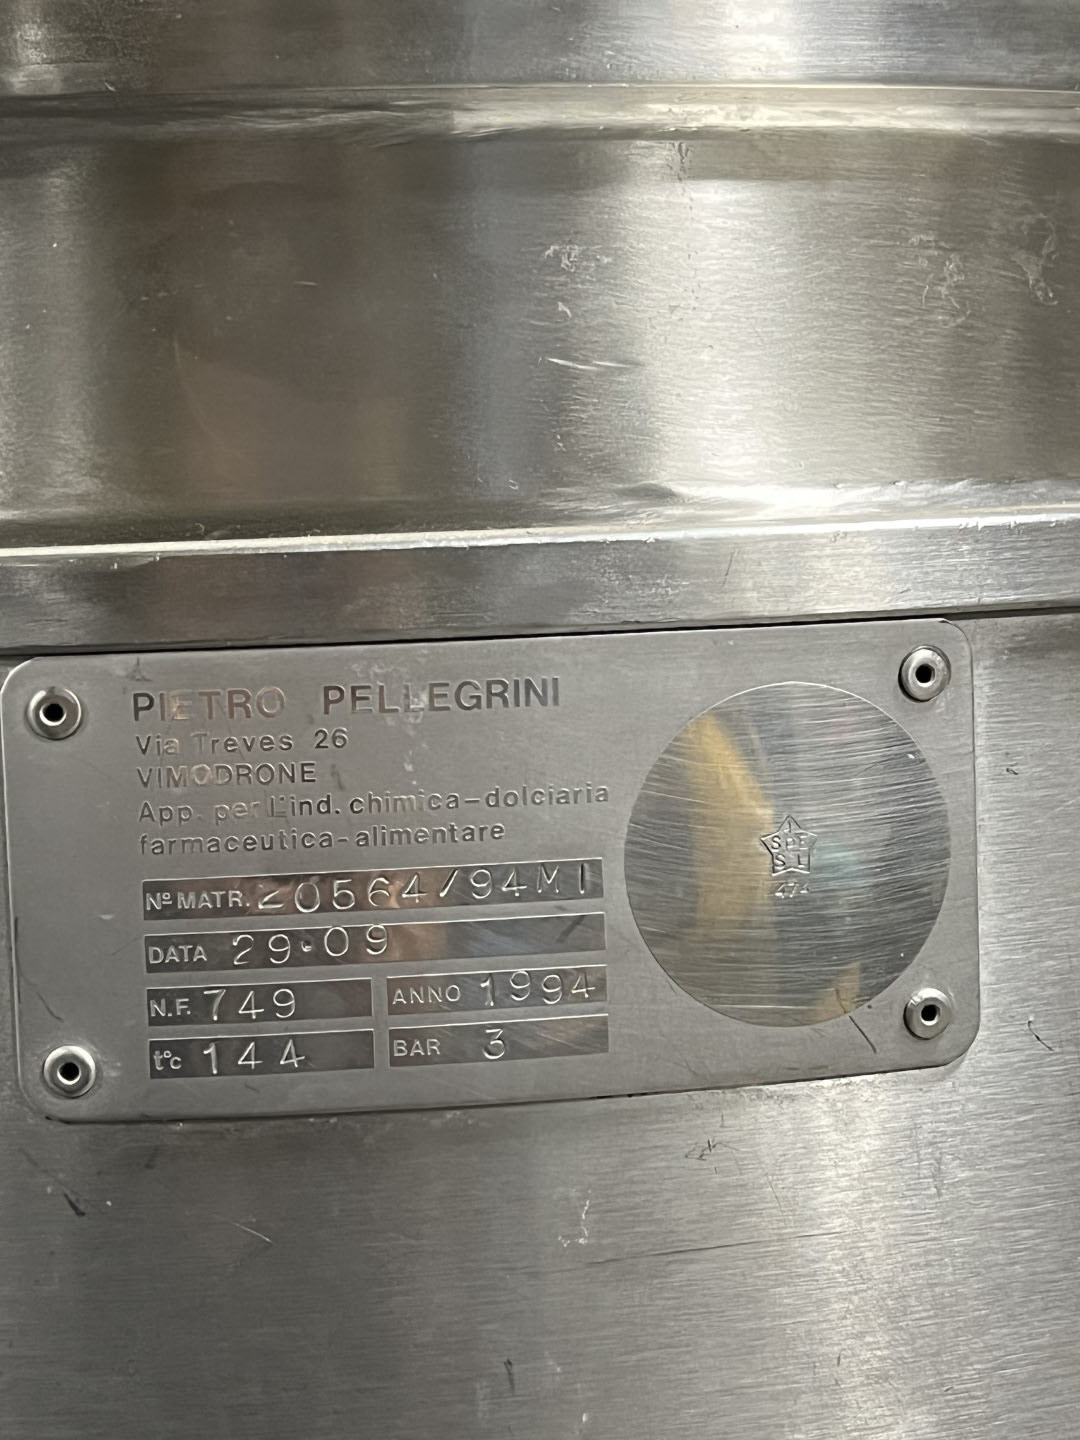 150 Liter Pellegrini Planetary Mixer, S/S